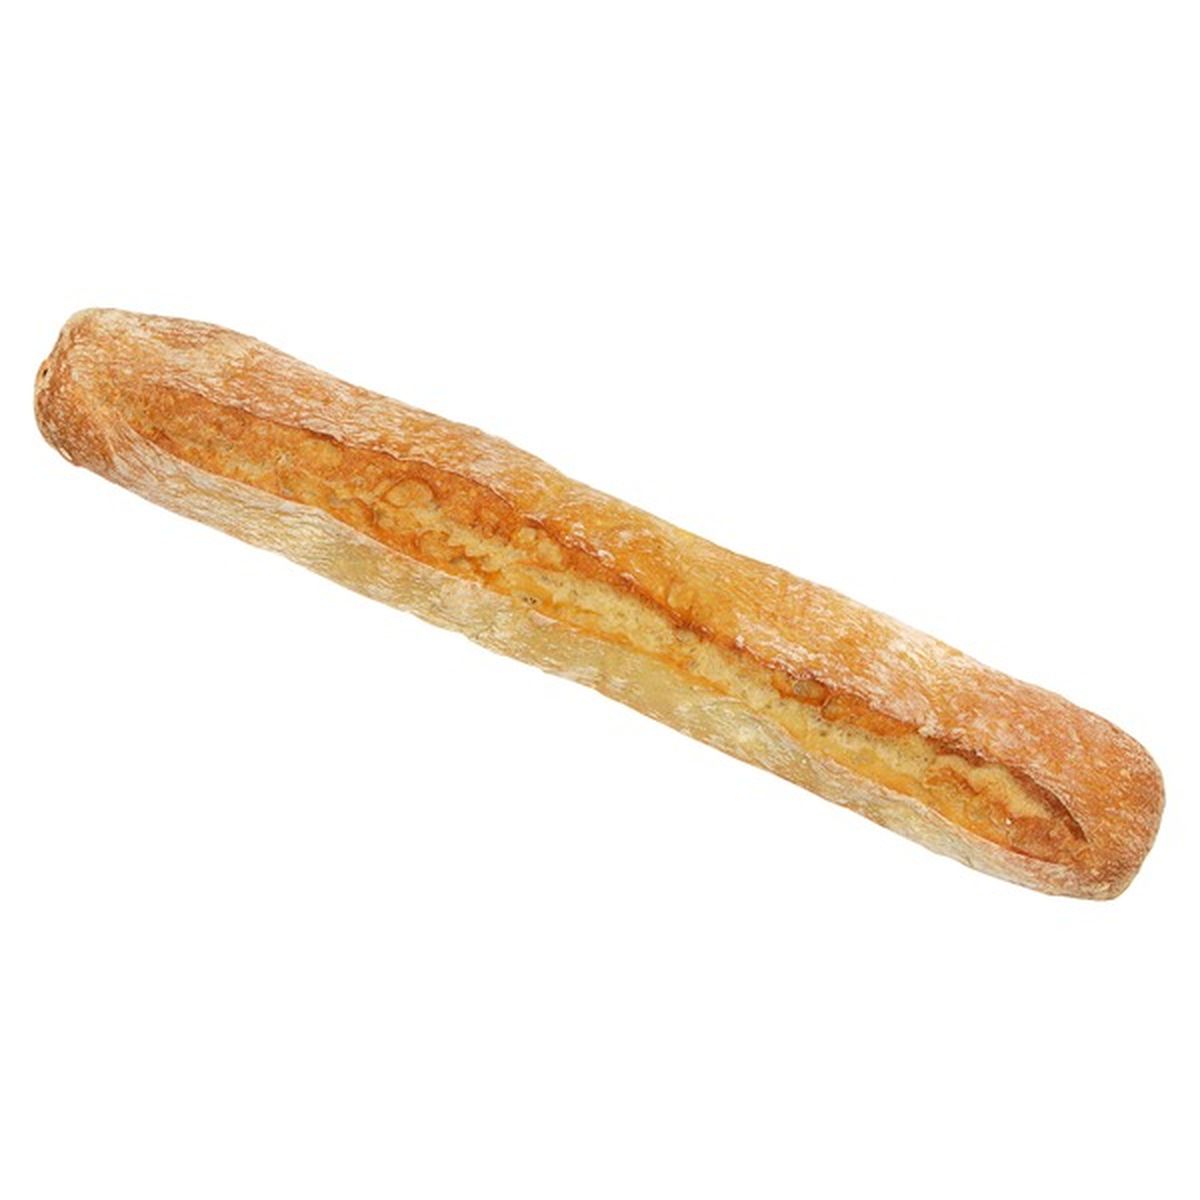 1 baguette, sliced